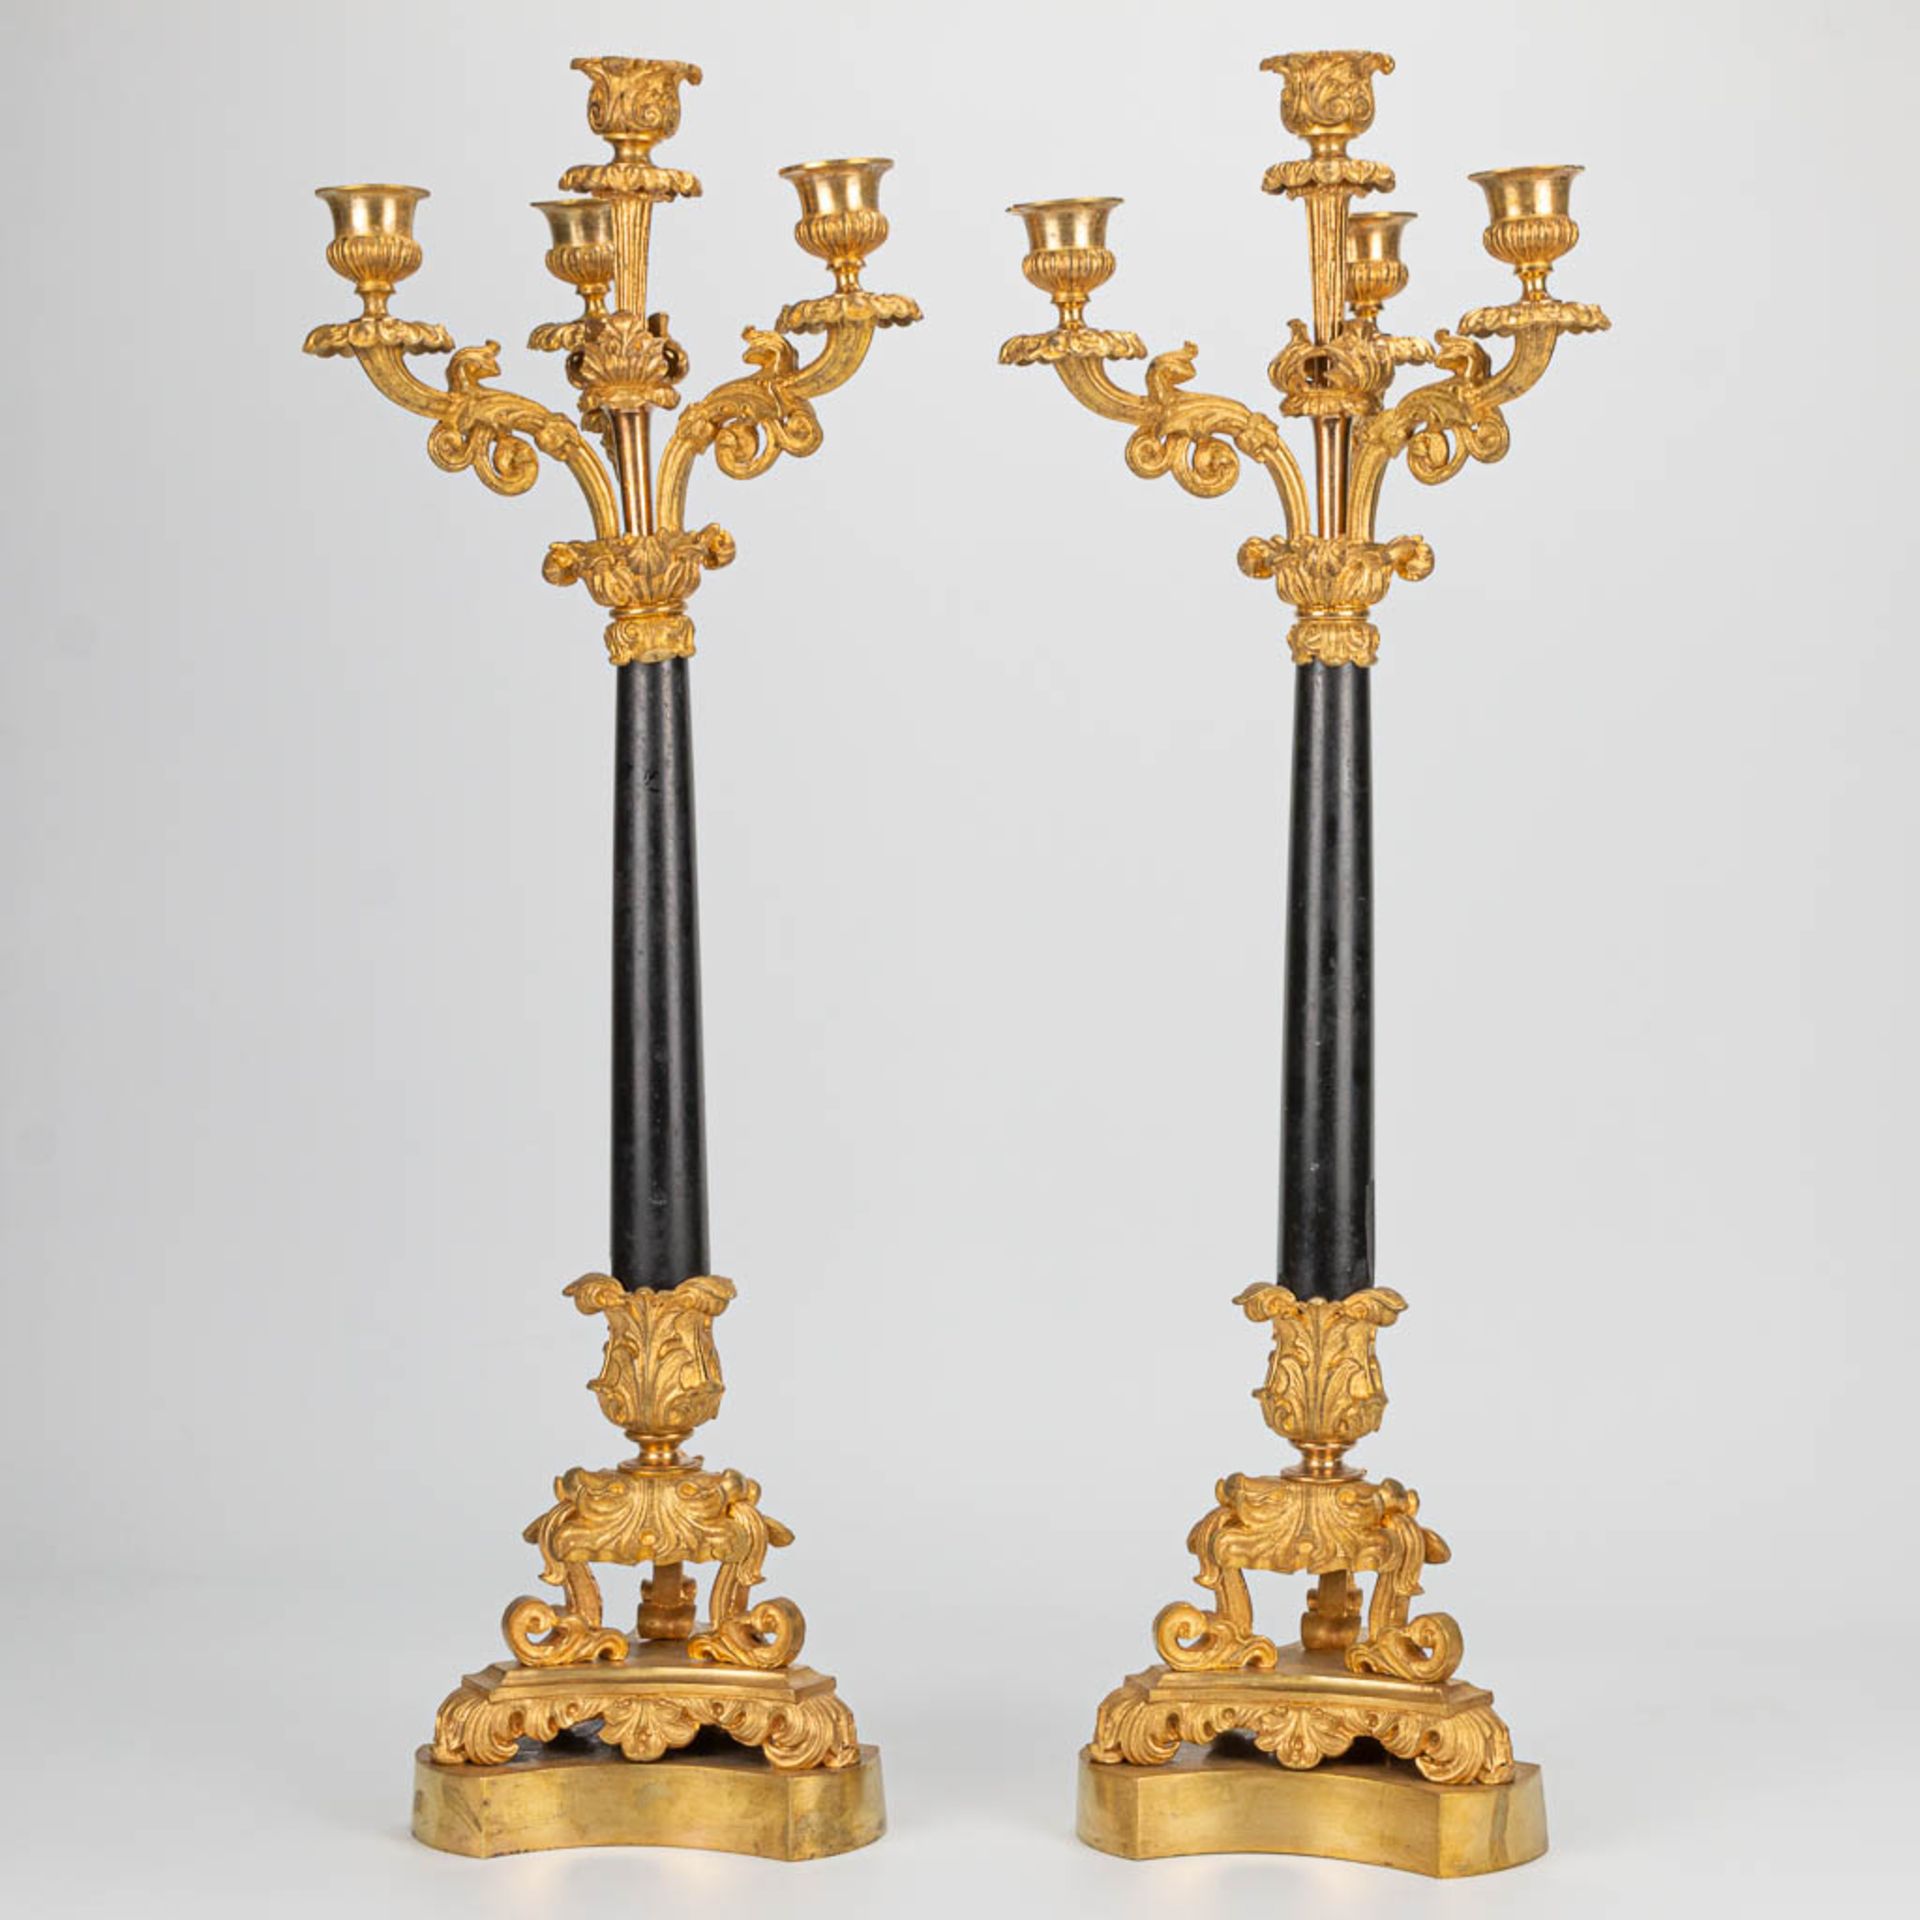 A pair of candelabra made of gilt bronze. 19th century. (21 x 19 x 60 cm) - Image 2 of 5